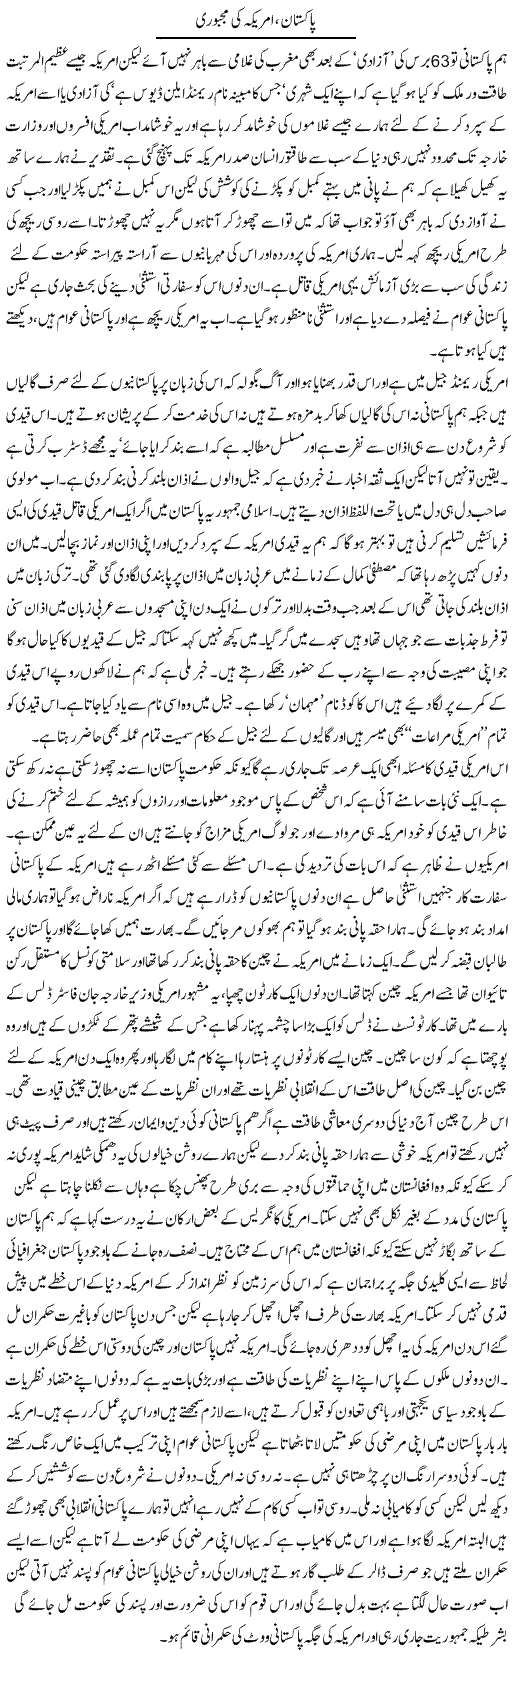 Pakistan and America Express Column Abdul Qadir 20 February 2011